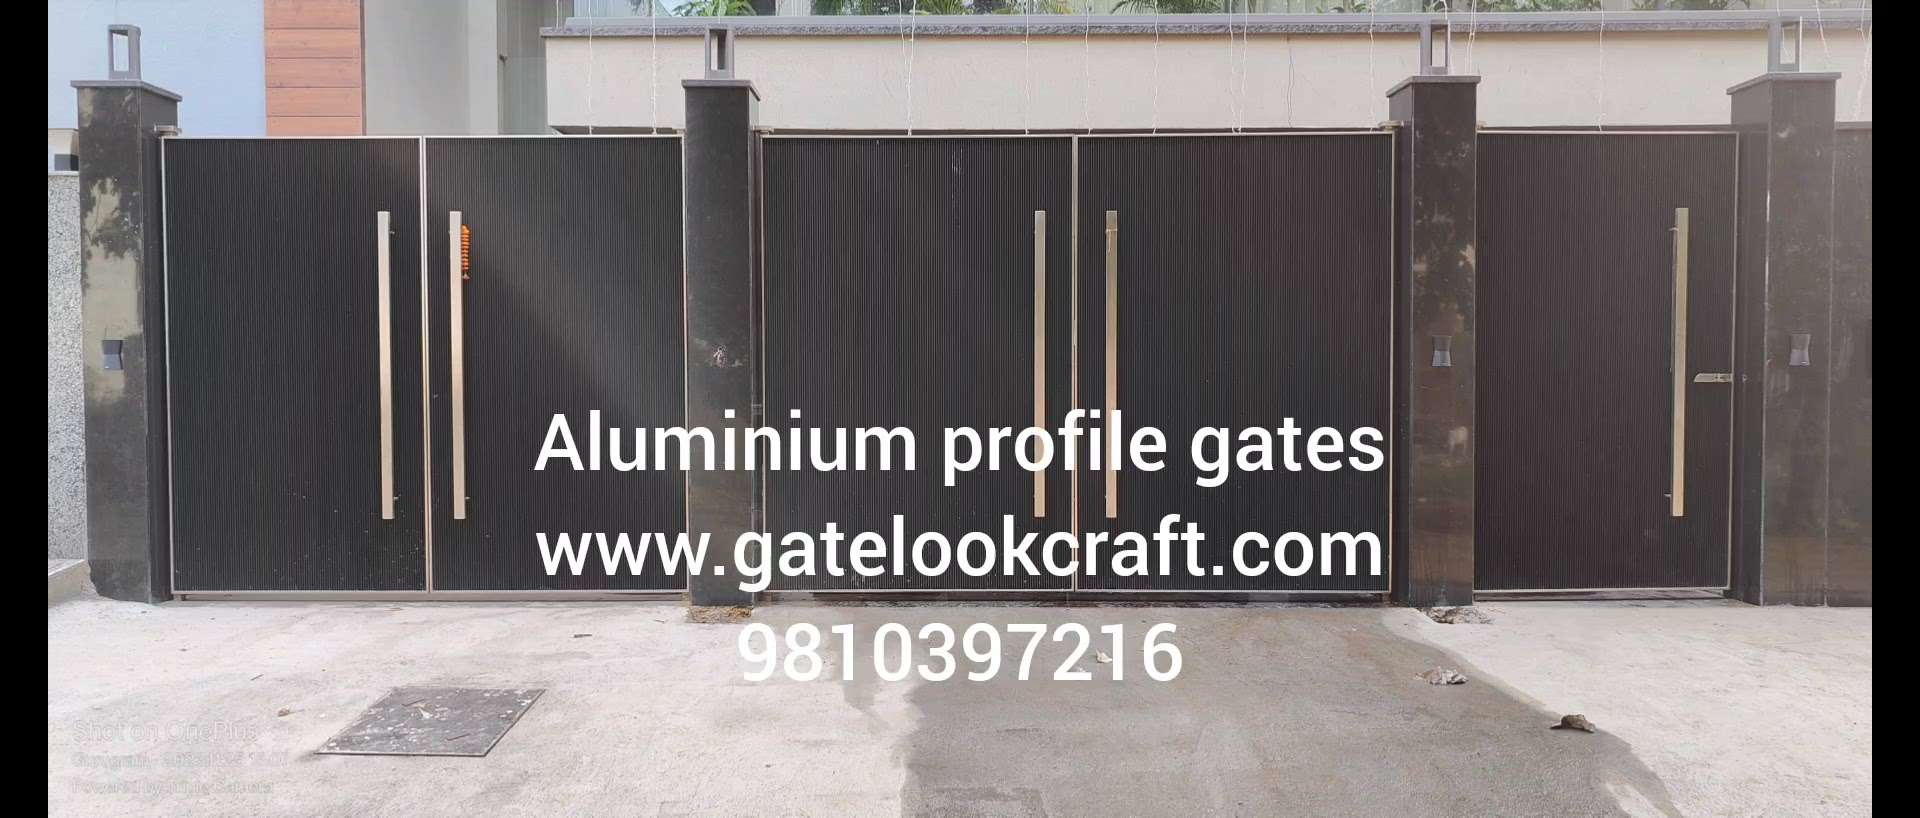 Aluminium profile gates by Hibza sterling interiors pvt ltd #gatelookcraft #aluminiumprofilegates #aluminiumprofile #Gates #MainGates #profilegate #aluminiumgates #modulergates #fancygates